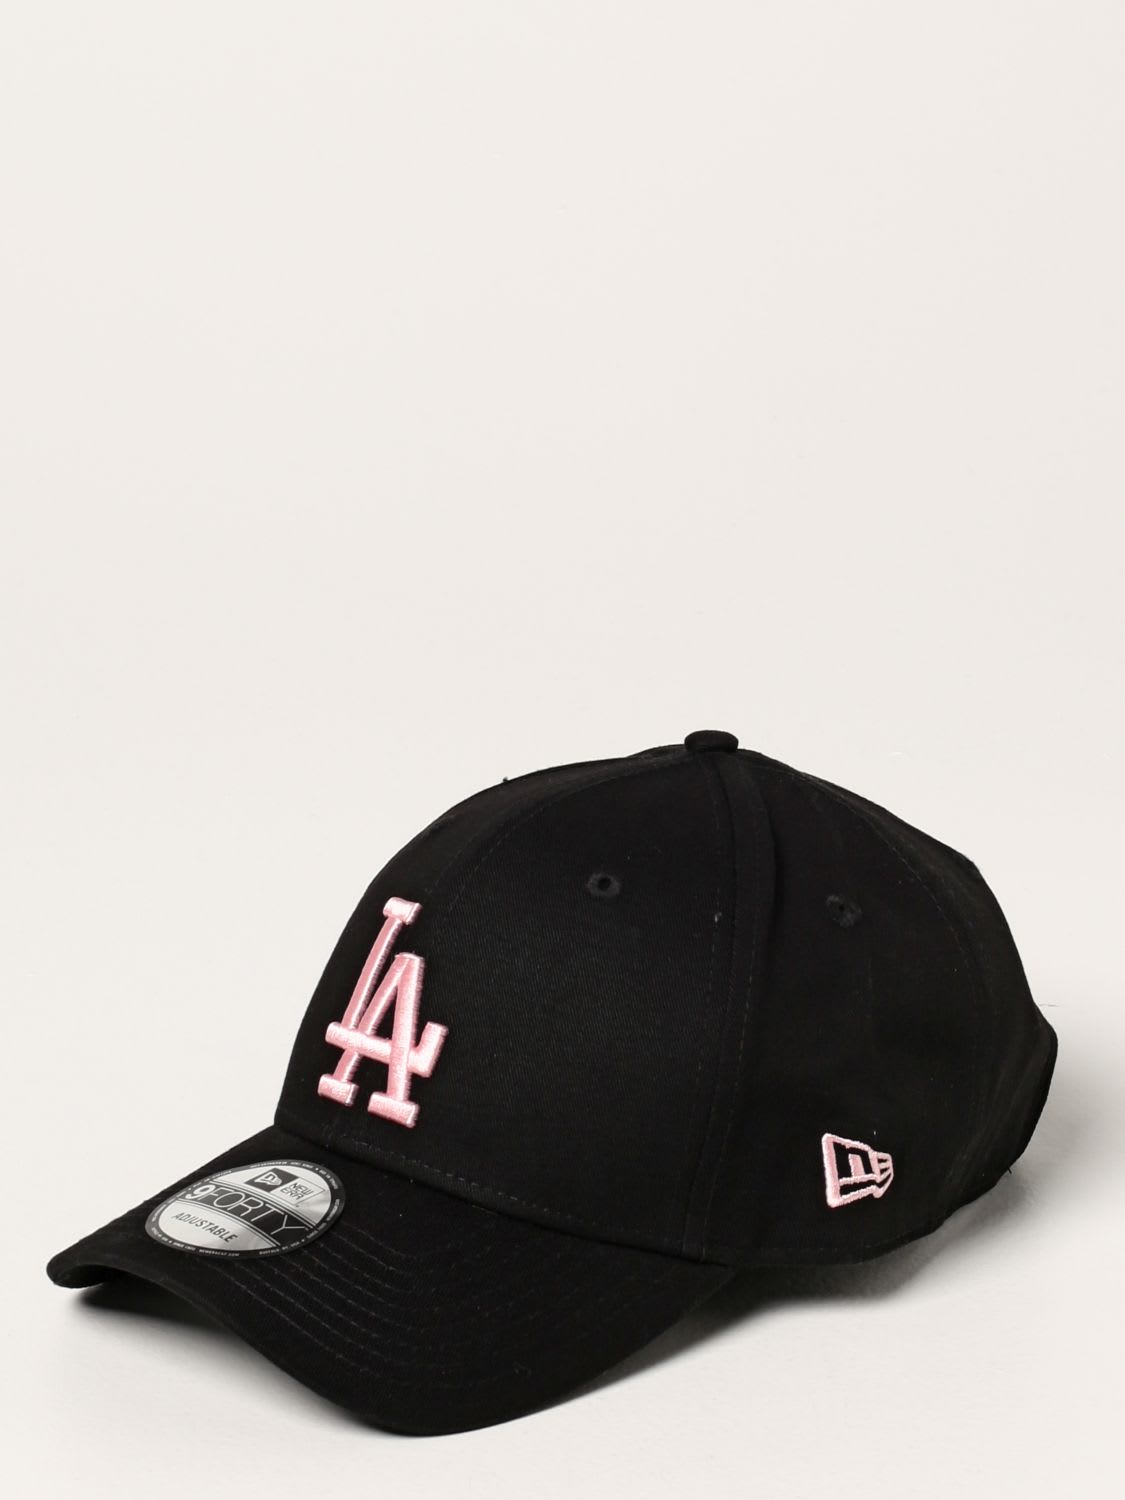 New Era Hat New Era Baseball Cap With La Logo